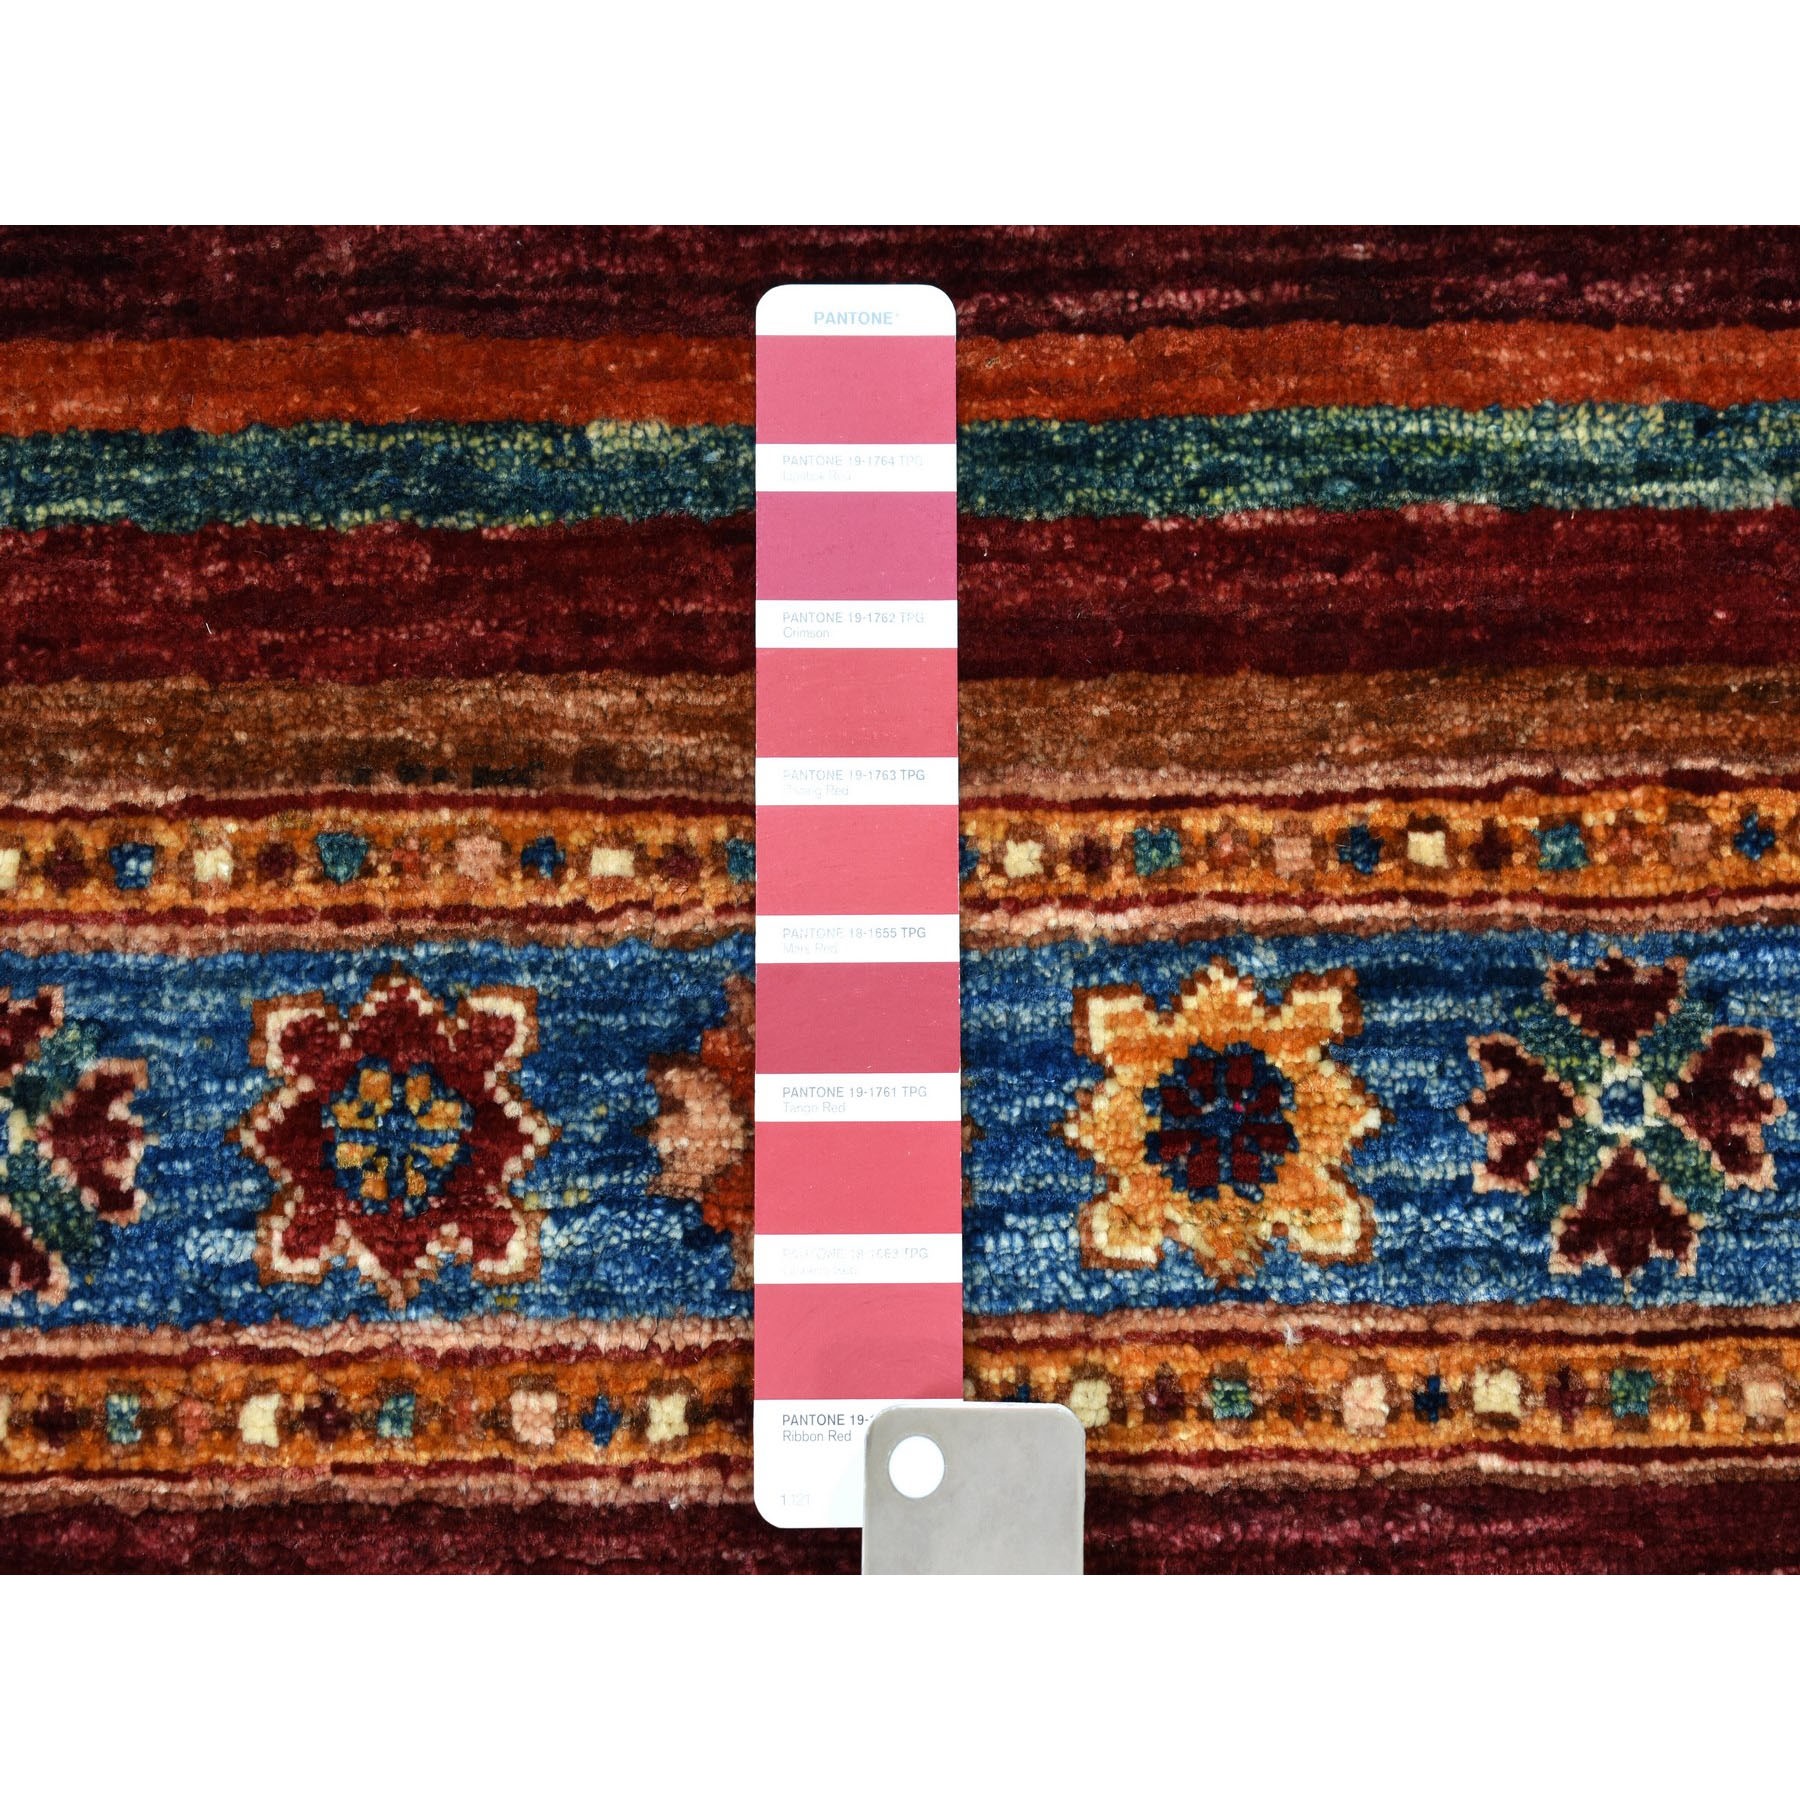 2-8 x4-2  Khorjin Design Colorful Super Kazak Pure Wool Hand Knotted Oriental Rug 